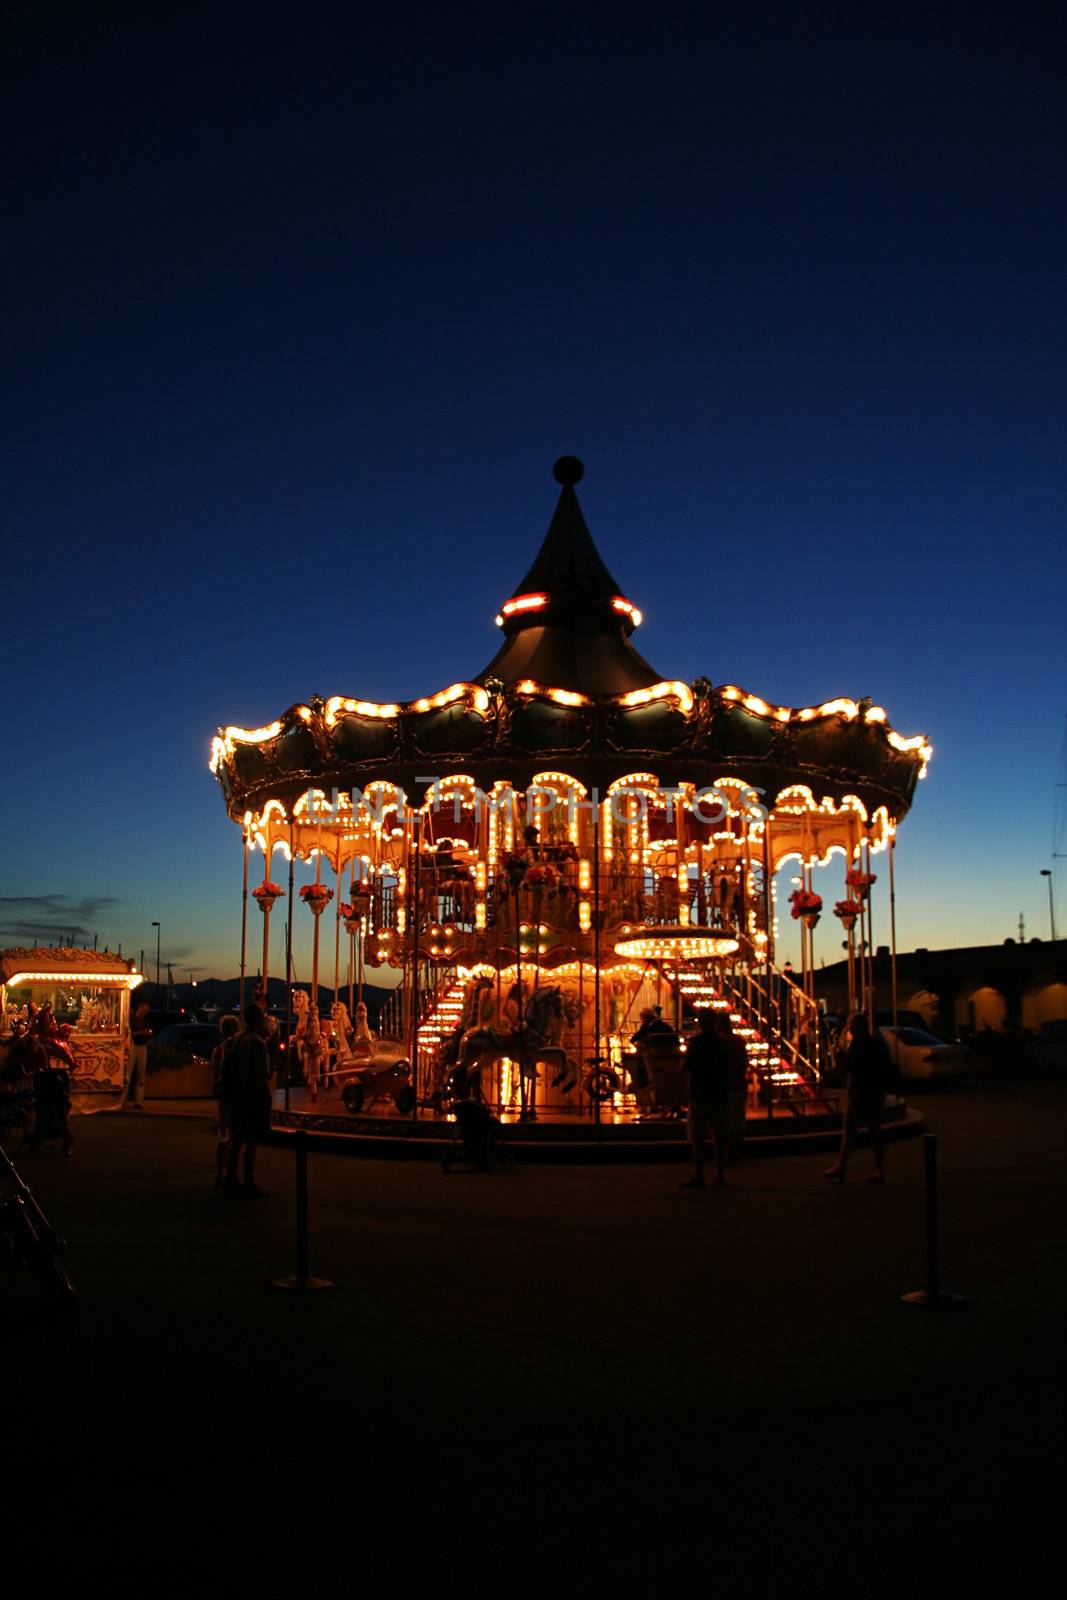 Nice Carousel with dark sky in the evening